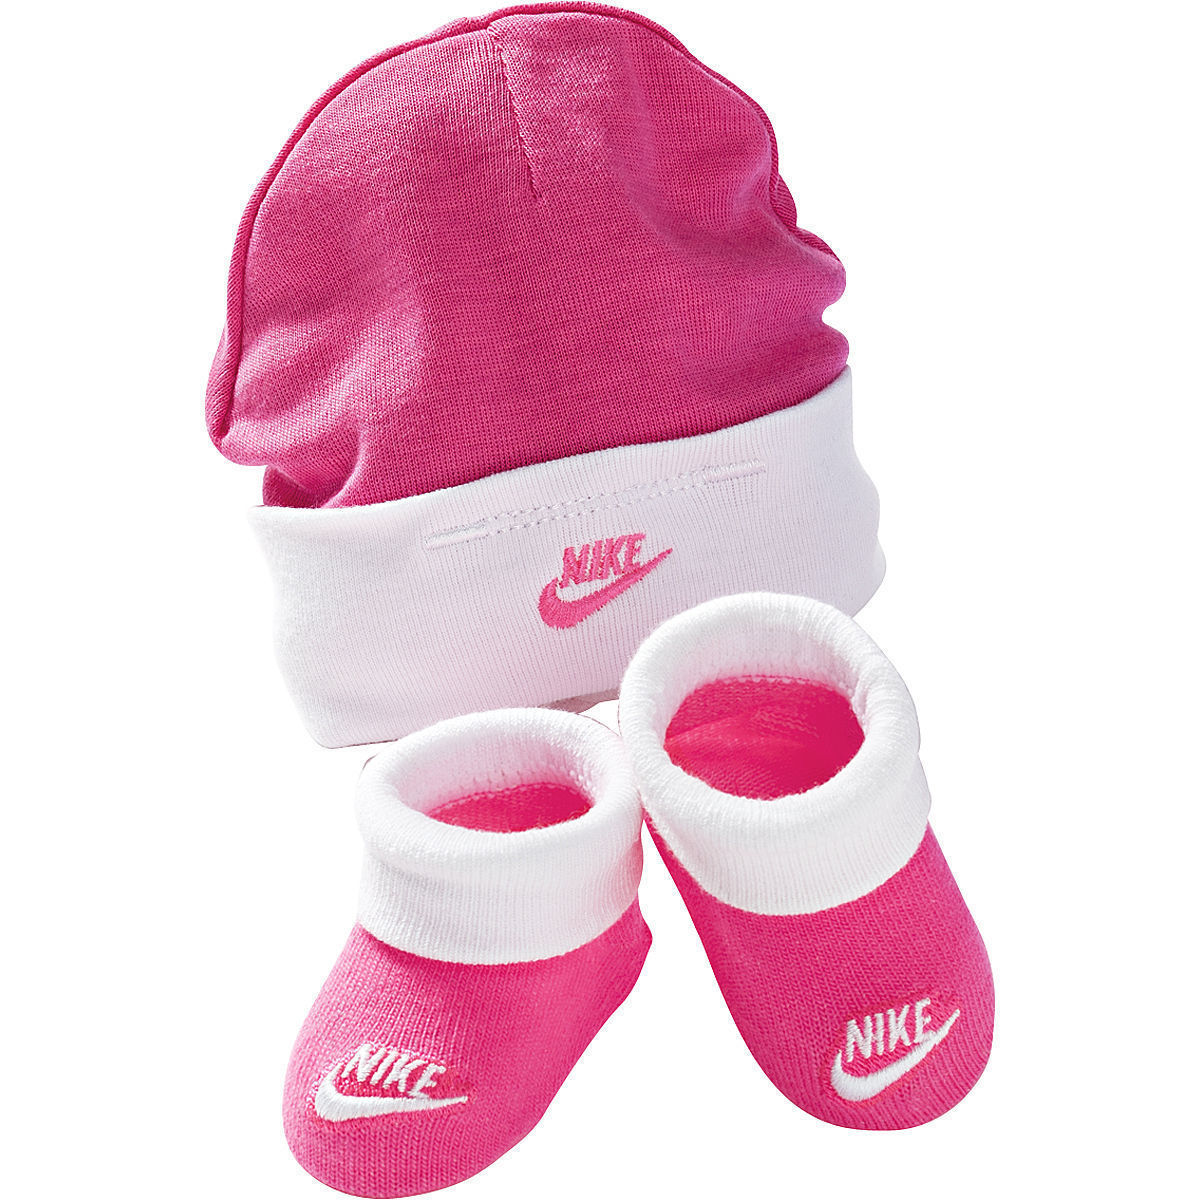 Nike Baby 2Teile Set Geschenk Schuhe Socken Mütze Newborn neugeborene 0-6 Monate